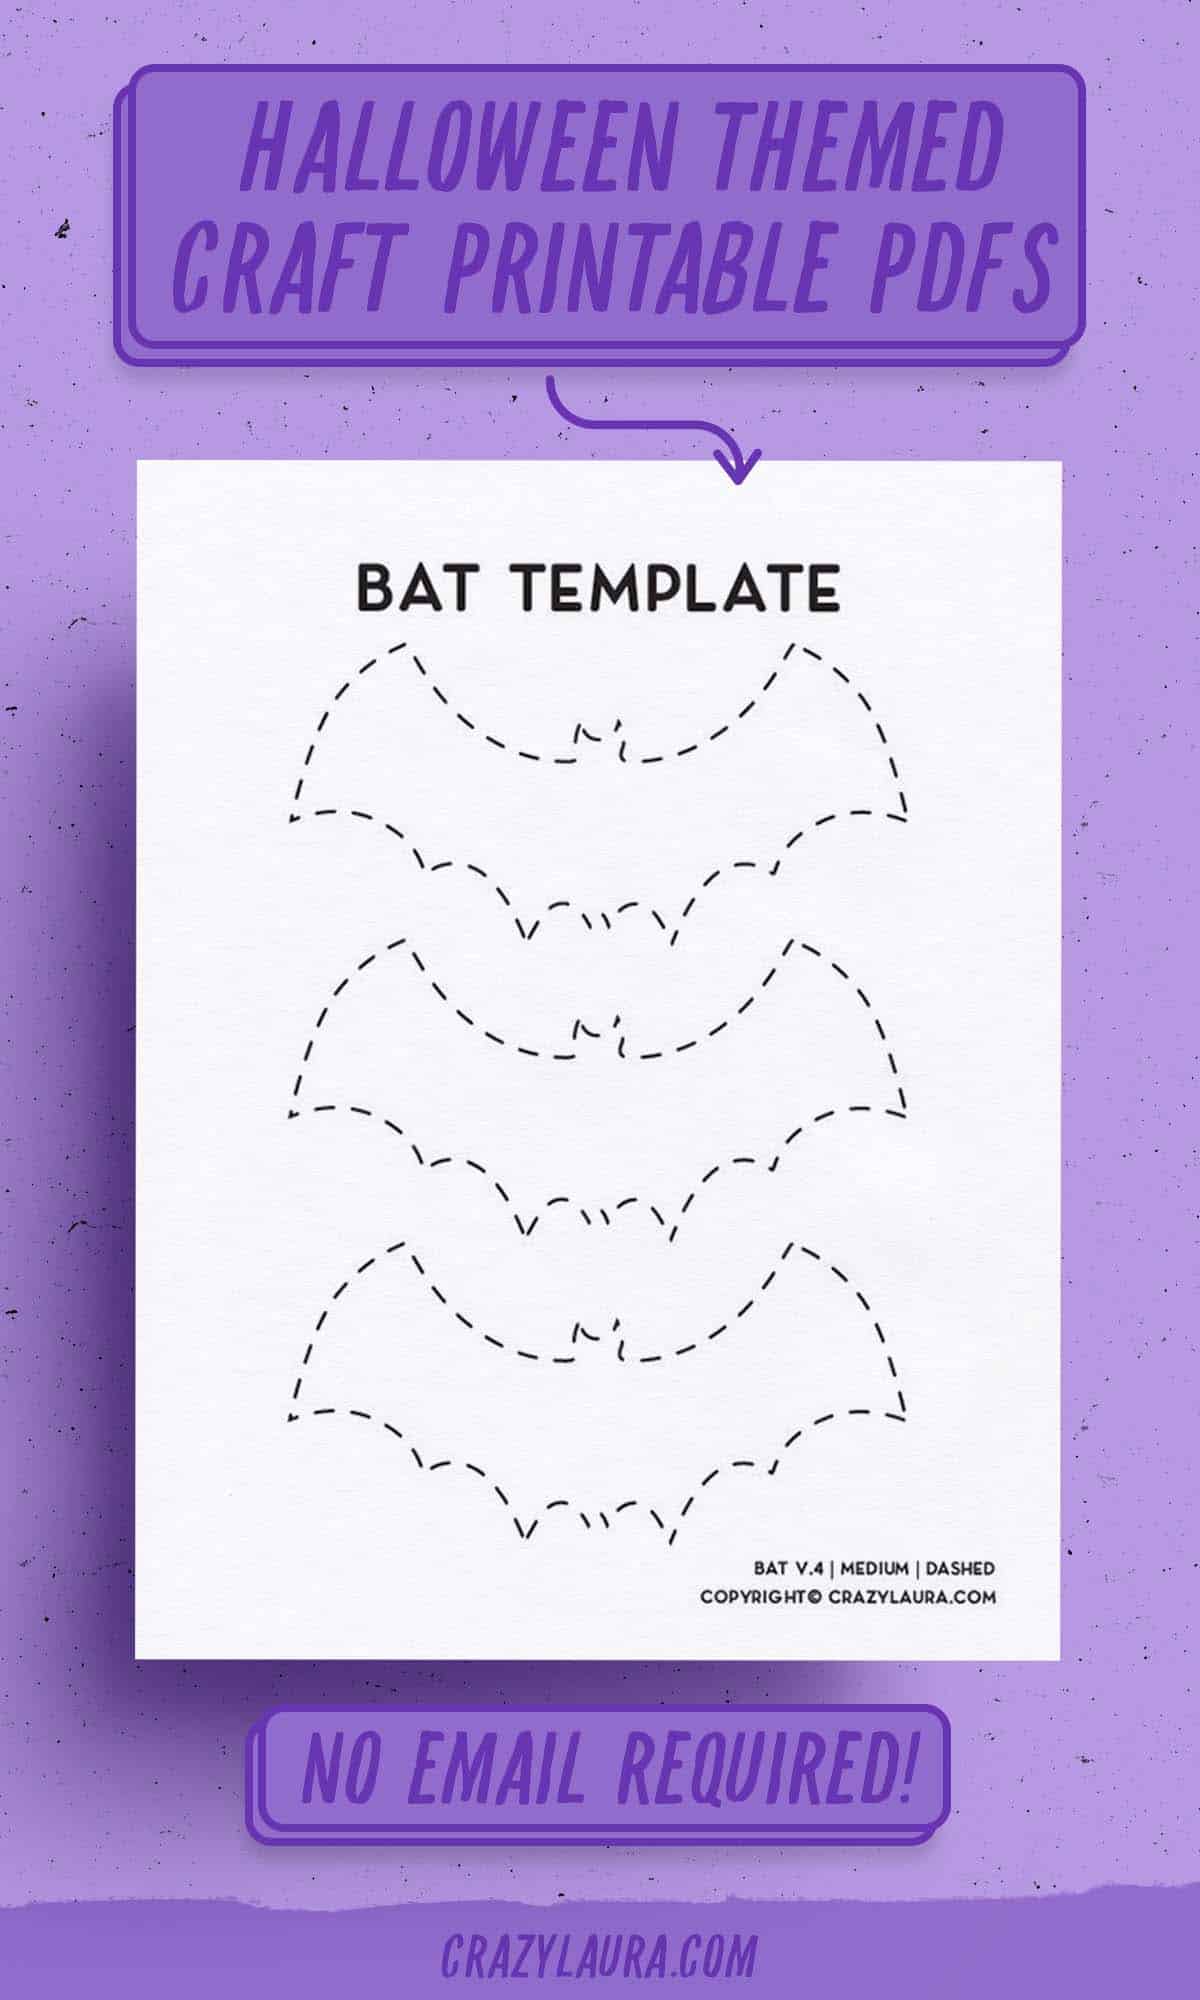 pdf sheet to print for halloween bat shape